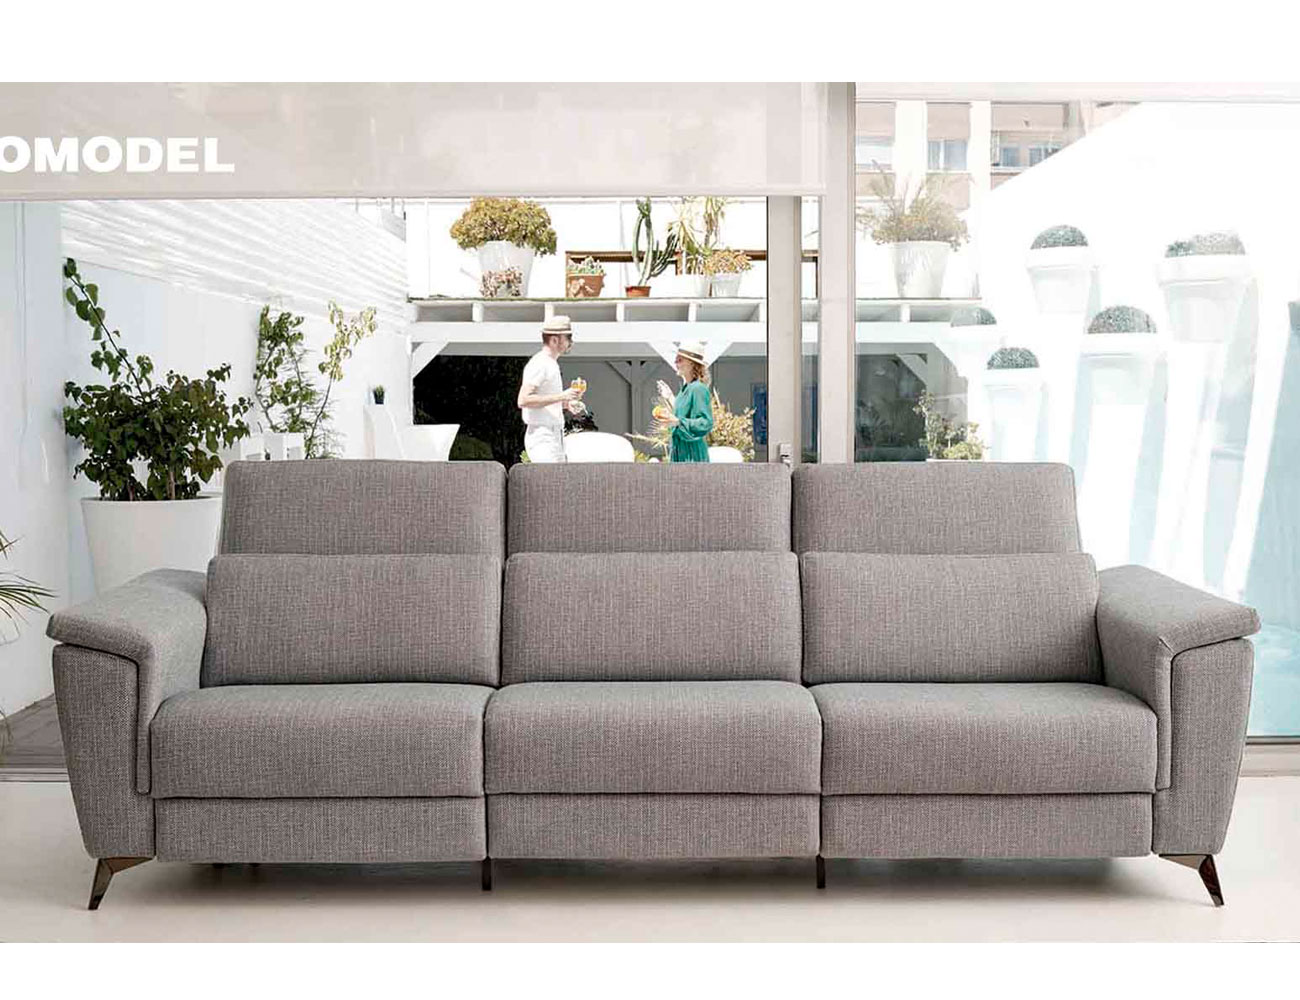 Sofa selec acomodel 2